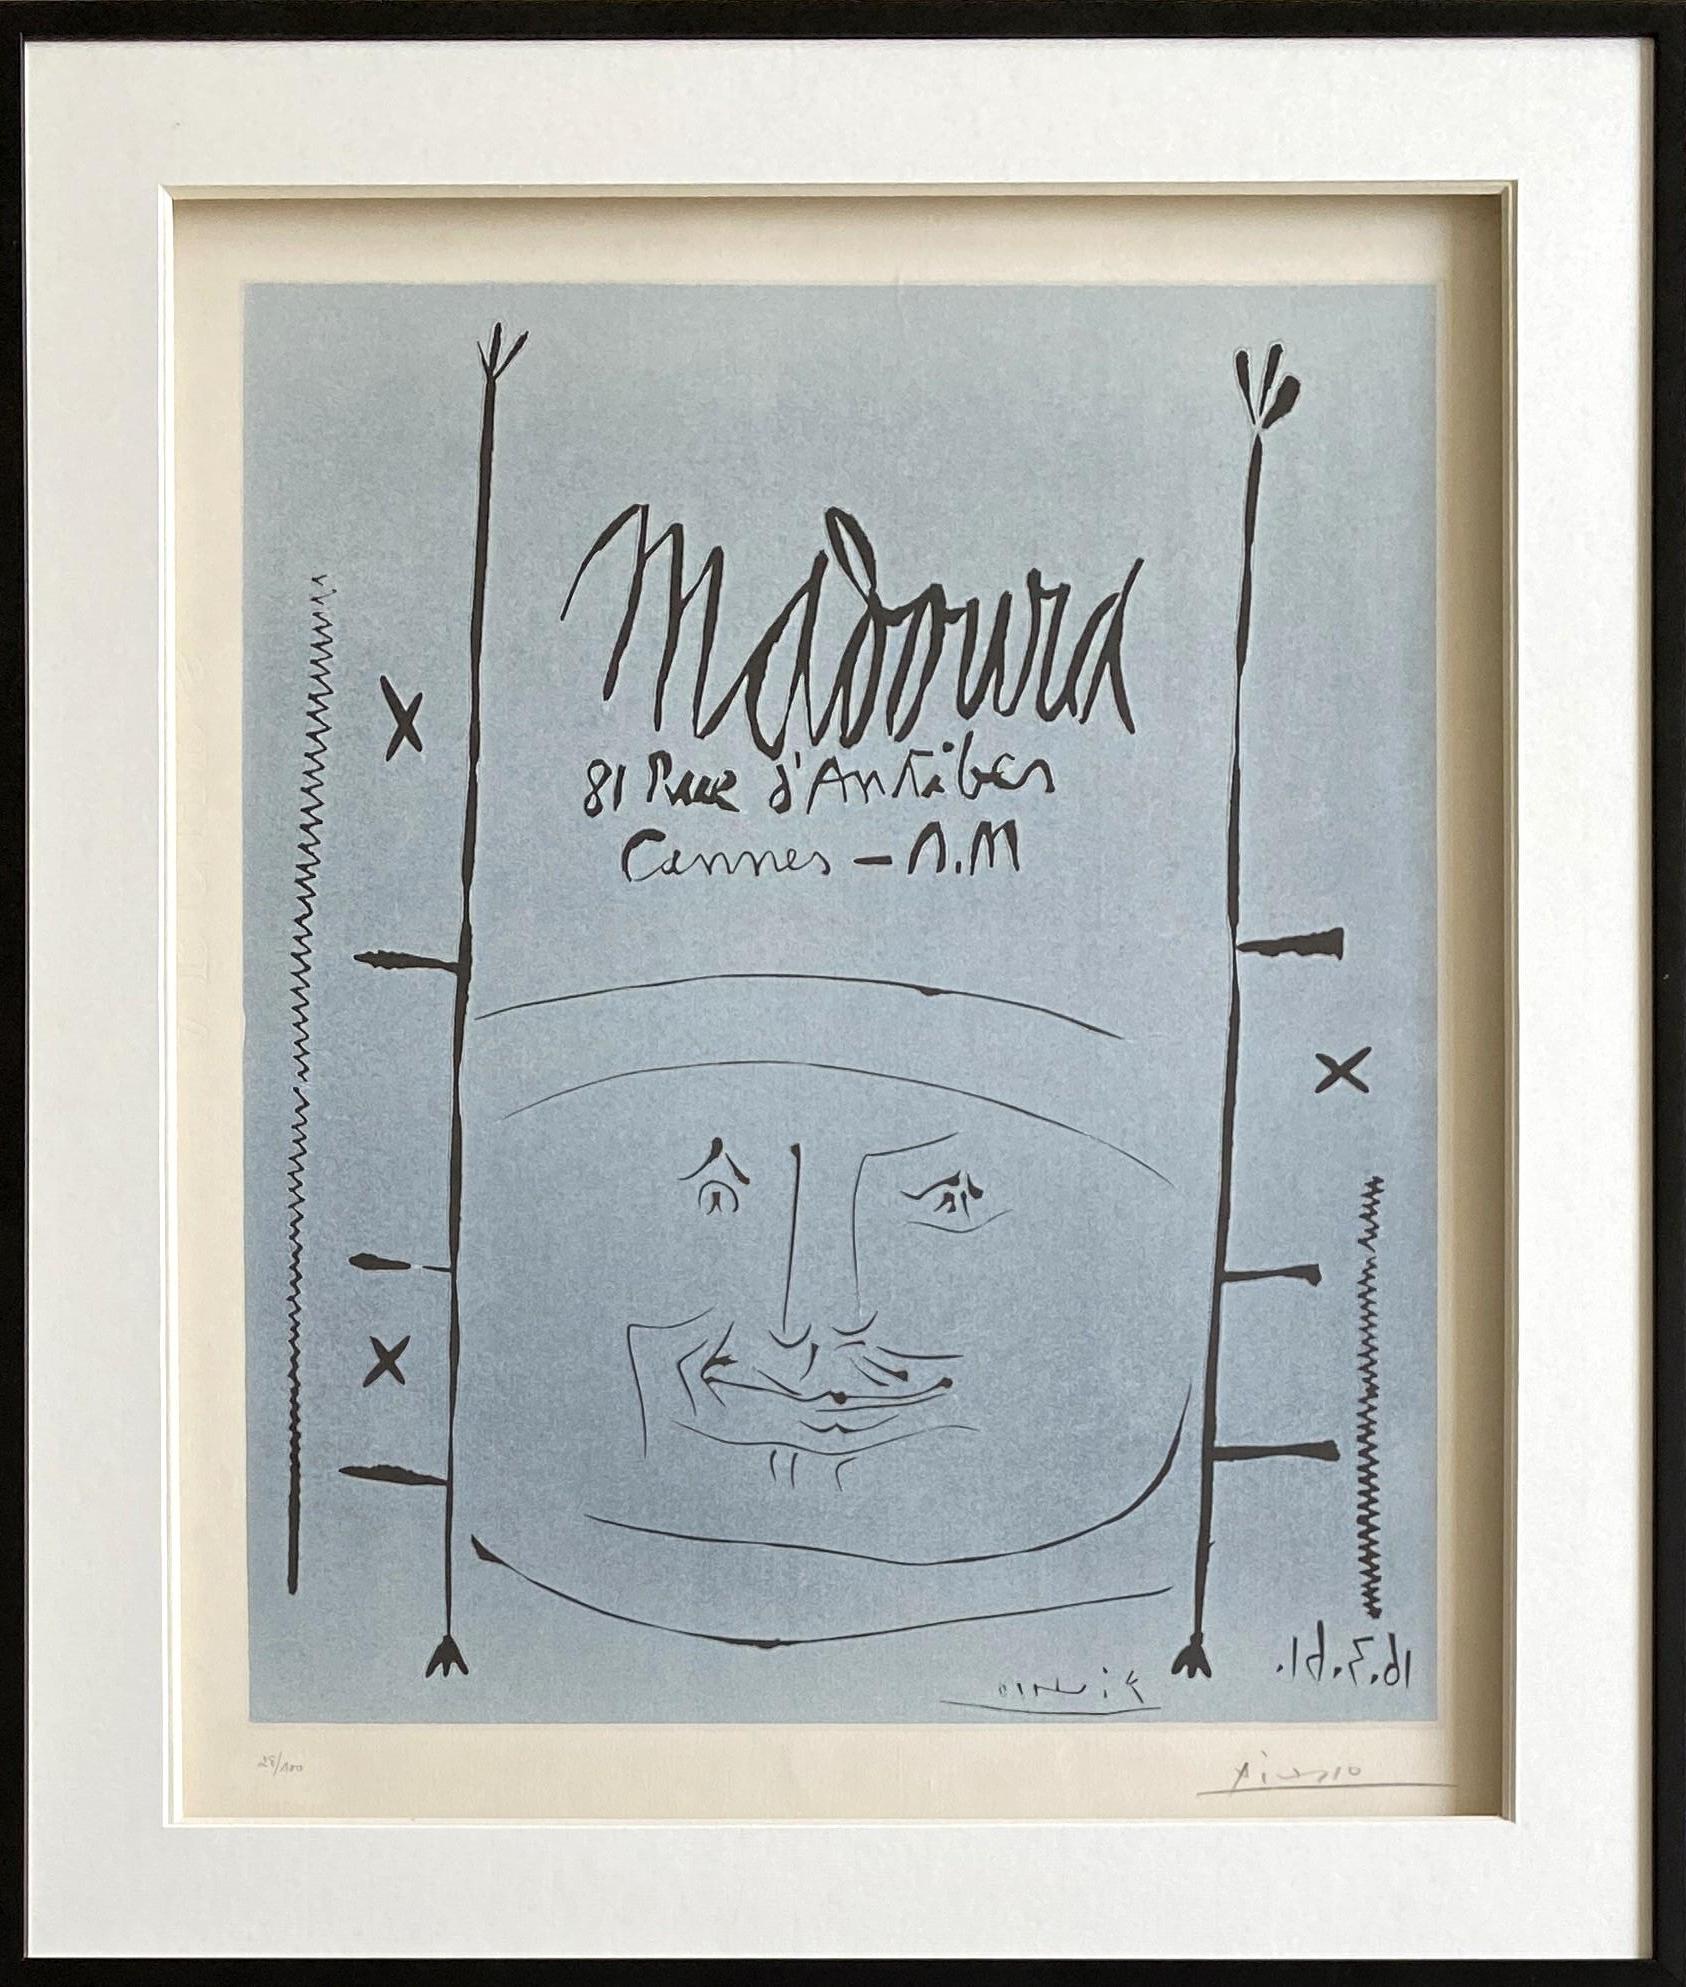 Pablo Picasso Portrait Print - Madoura, 81, Rue d'An - Original Linocut Handsigned and Ltd /100 - (Bloch #1296)